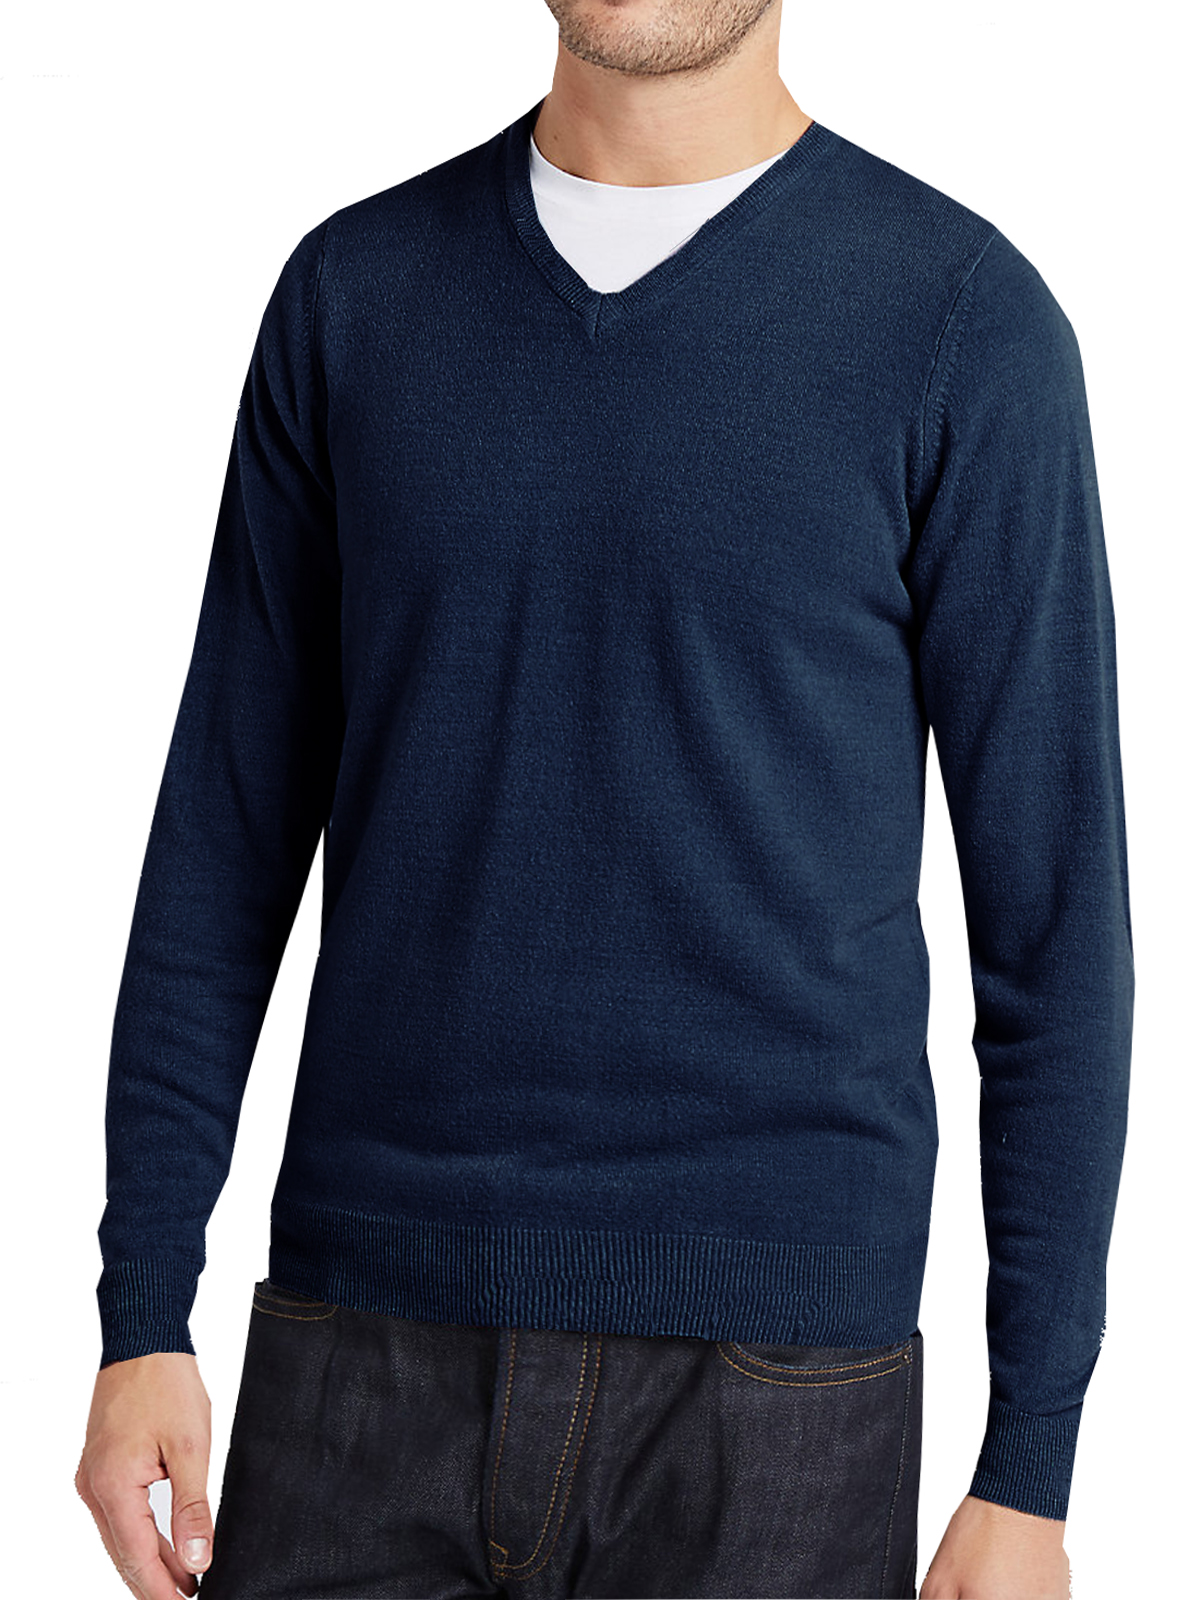 Marks and Spencer - - M&5 NAVY V-Neck Long Sleeve Knitted Jumper - Size ...